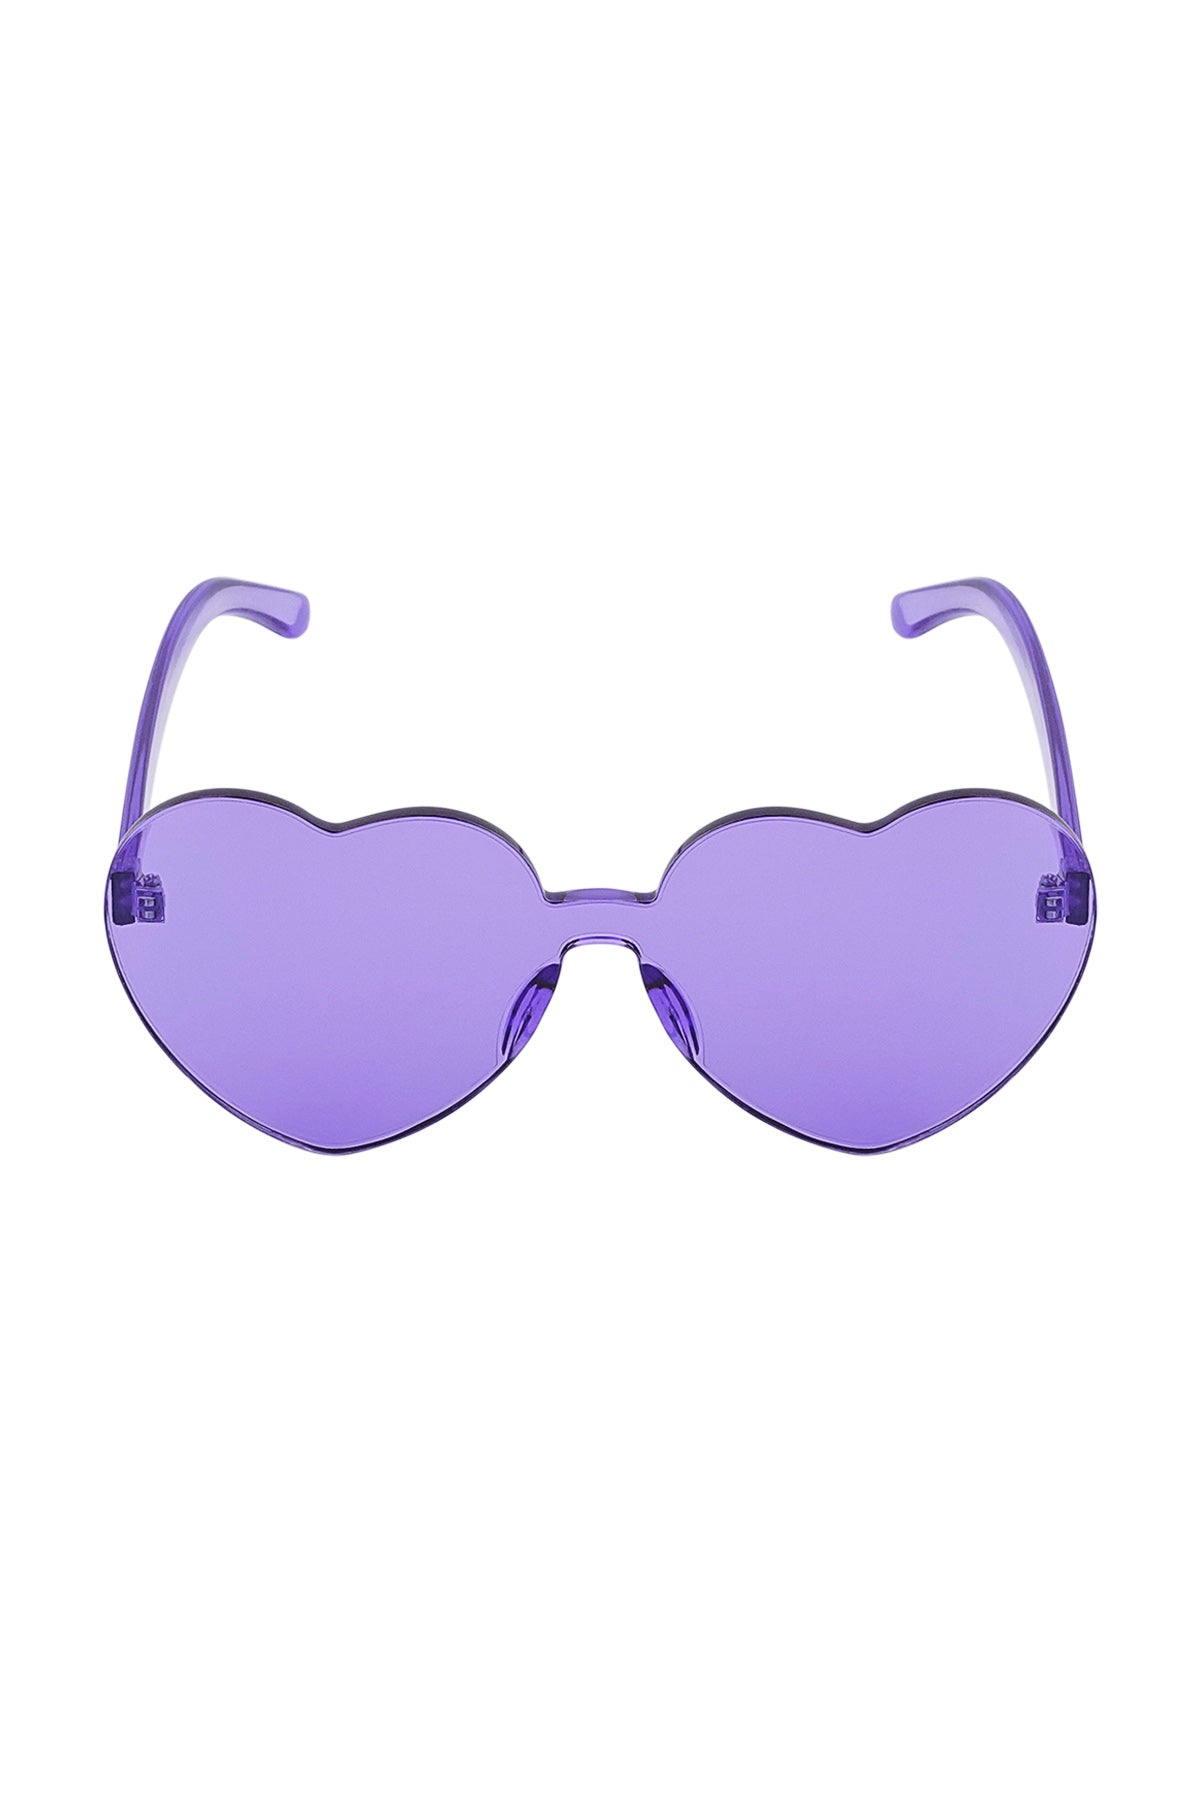 The Edit - Violet Heart Shaped Sunglasses